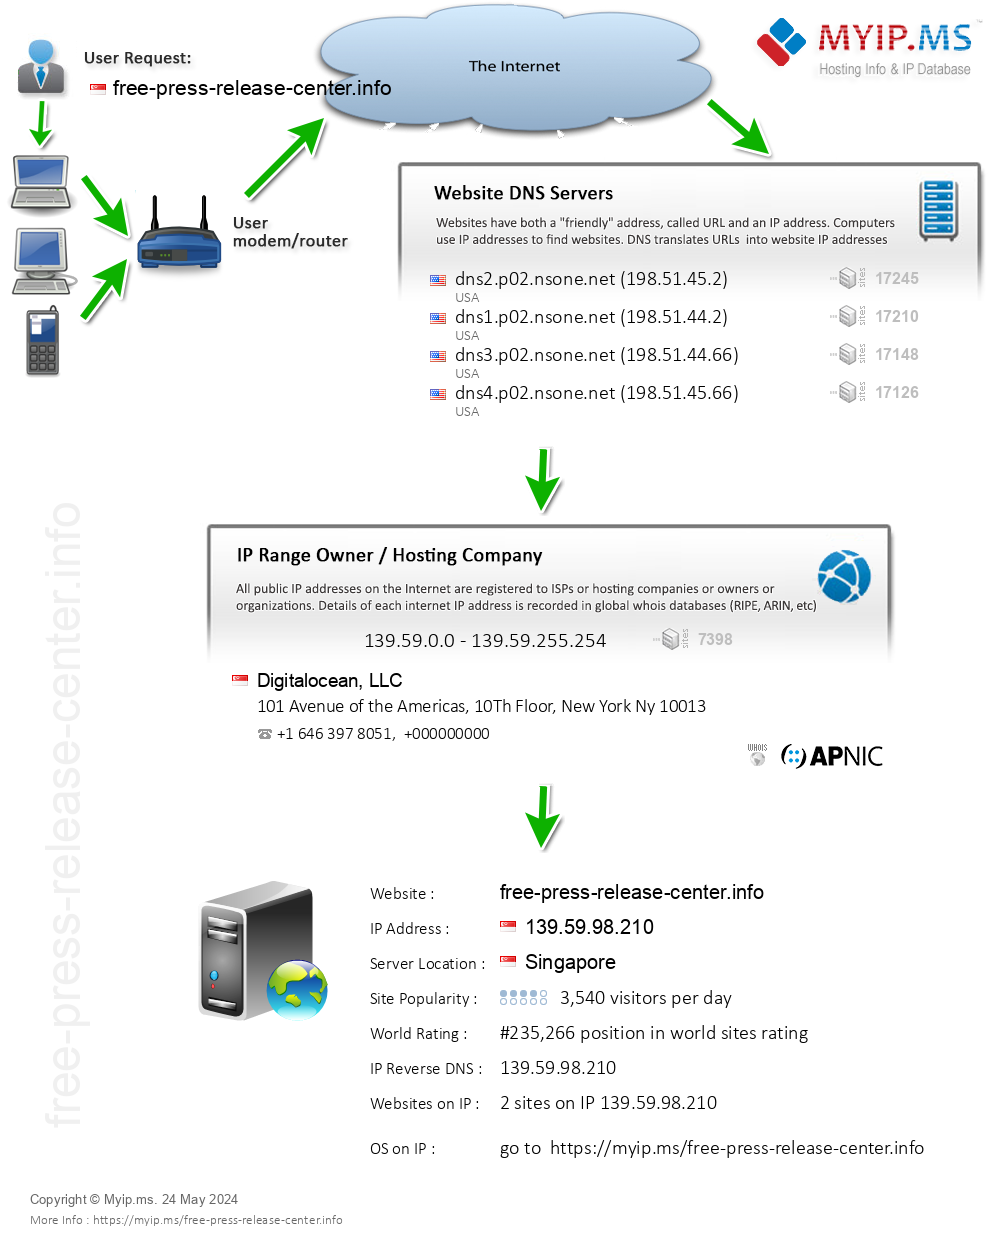 Free-press-release-center.info - Website Hosting Visual IP Diagram